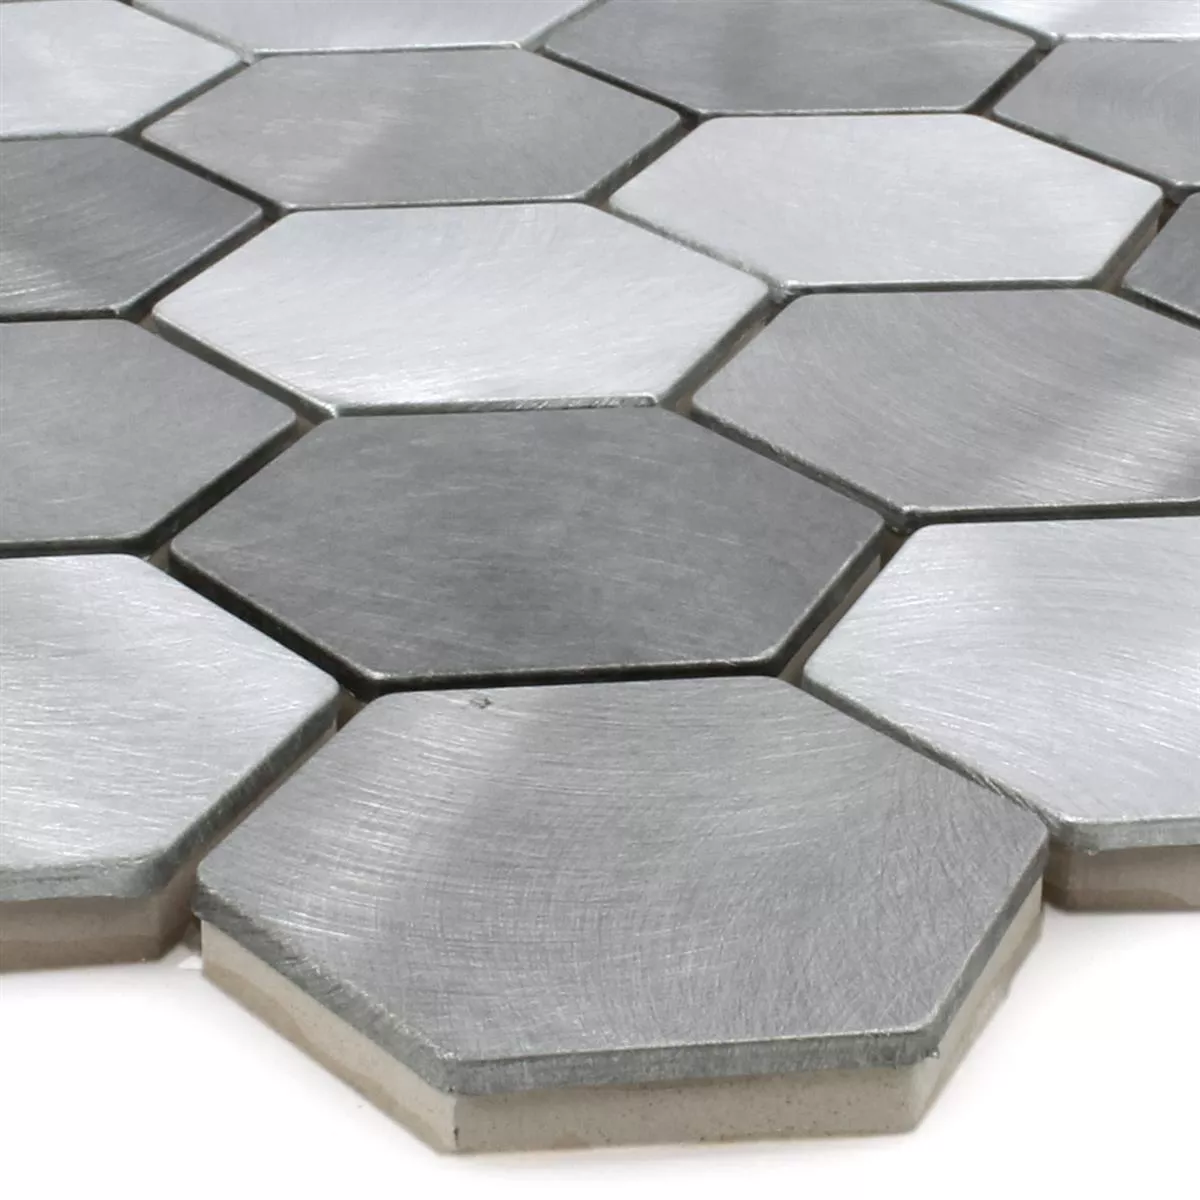 Sample Mosaic Tiles Aluminium Manhatten Hexagon Grey Silver